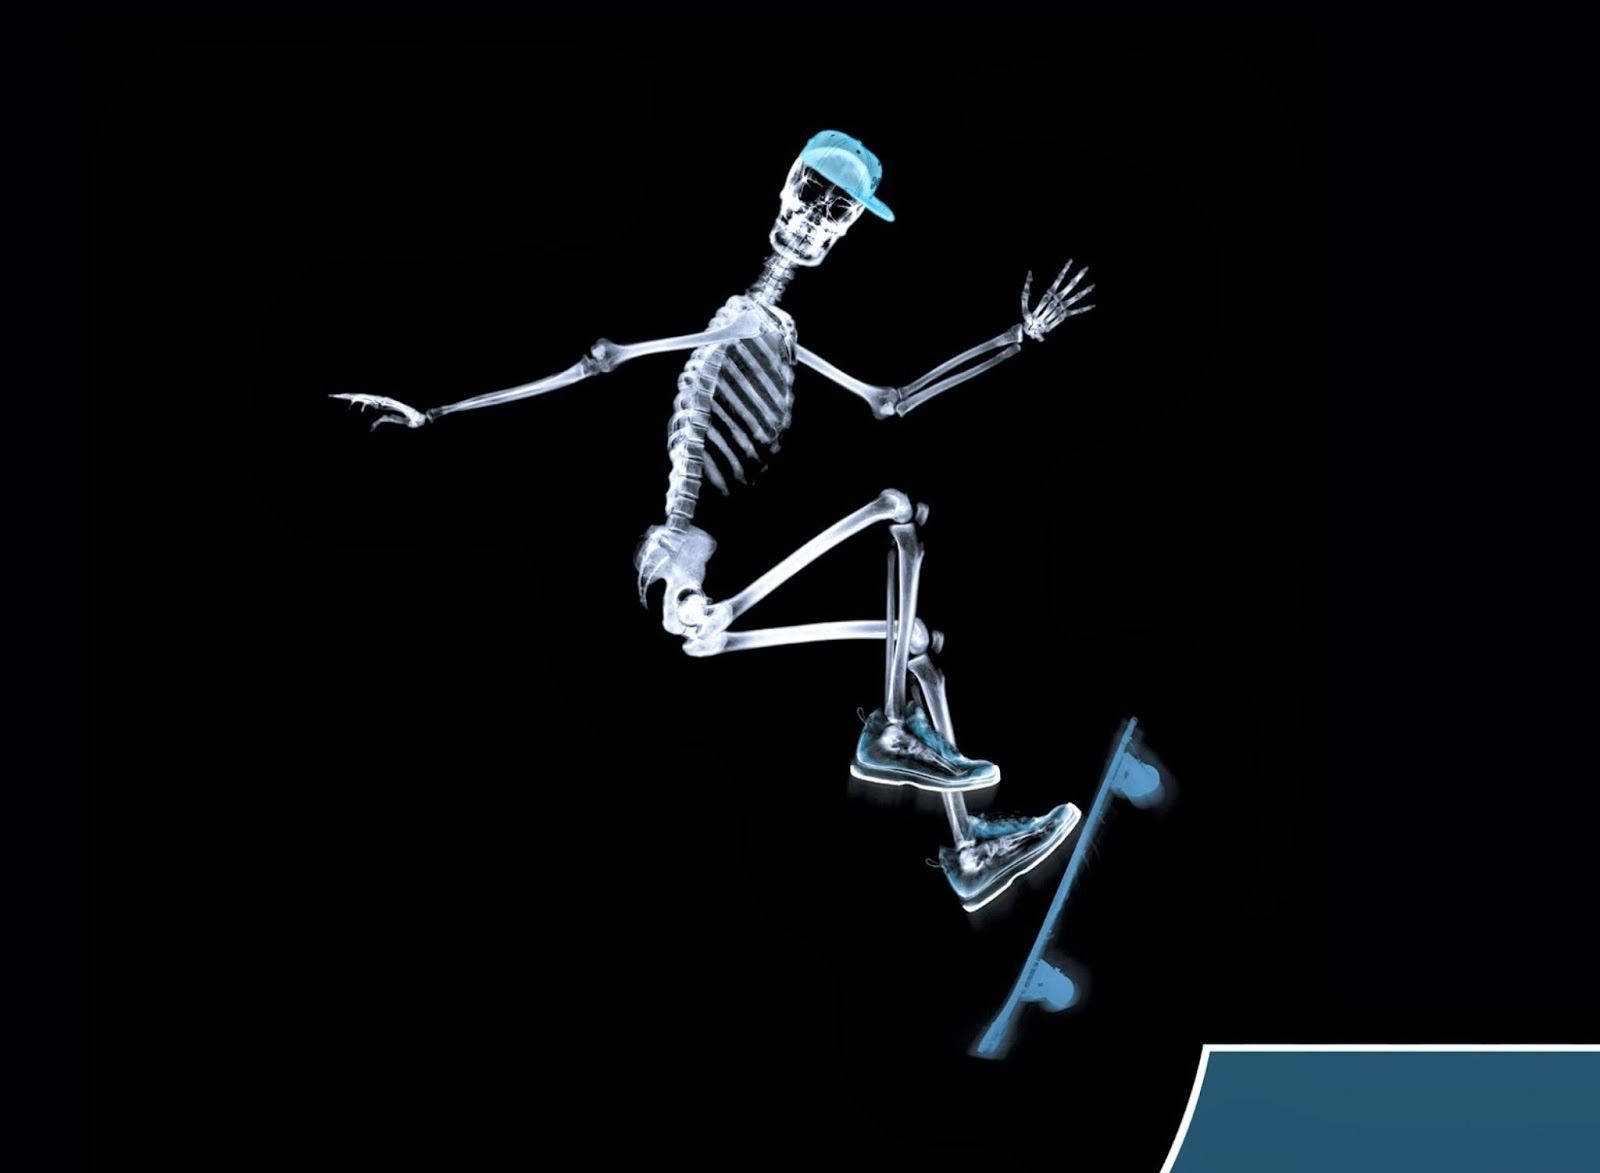 This Skeleton is up for some Skateboarding Wallpaper